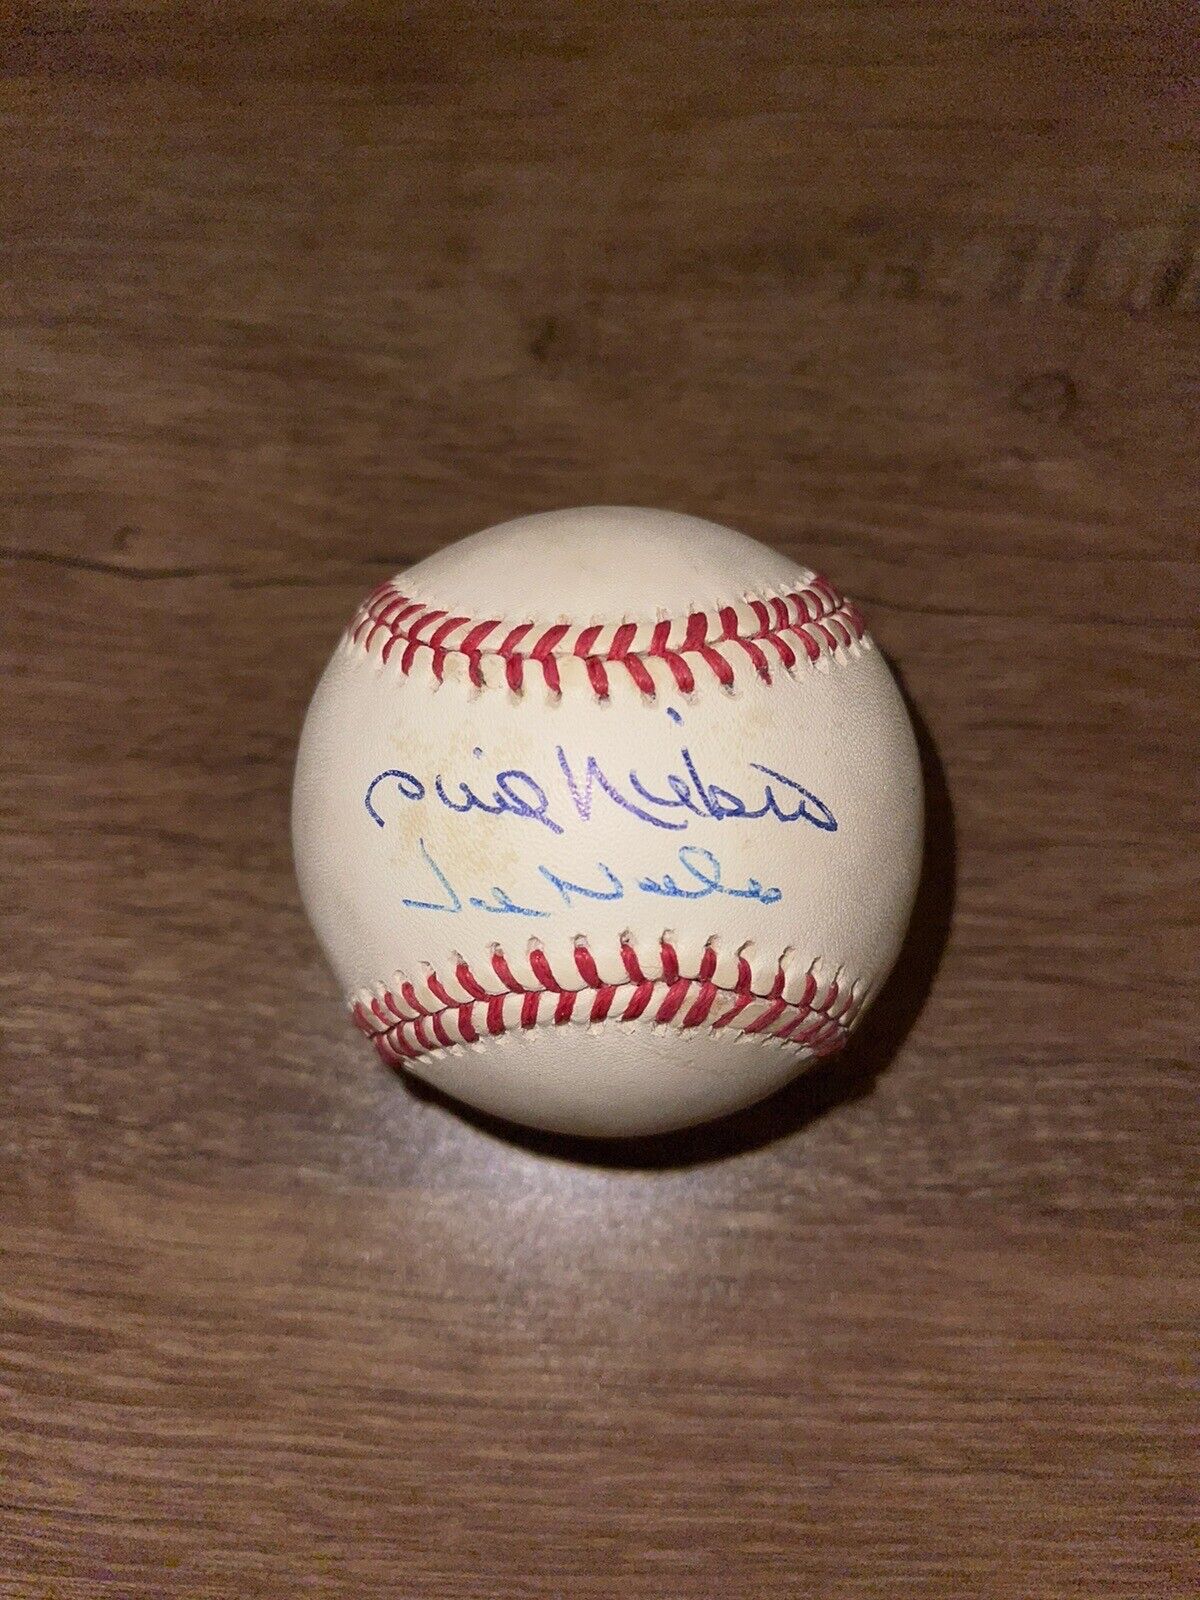 Hall of Fame Brothers Phil and Joe Niekro Autographed Signed Baseball.